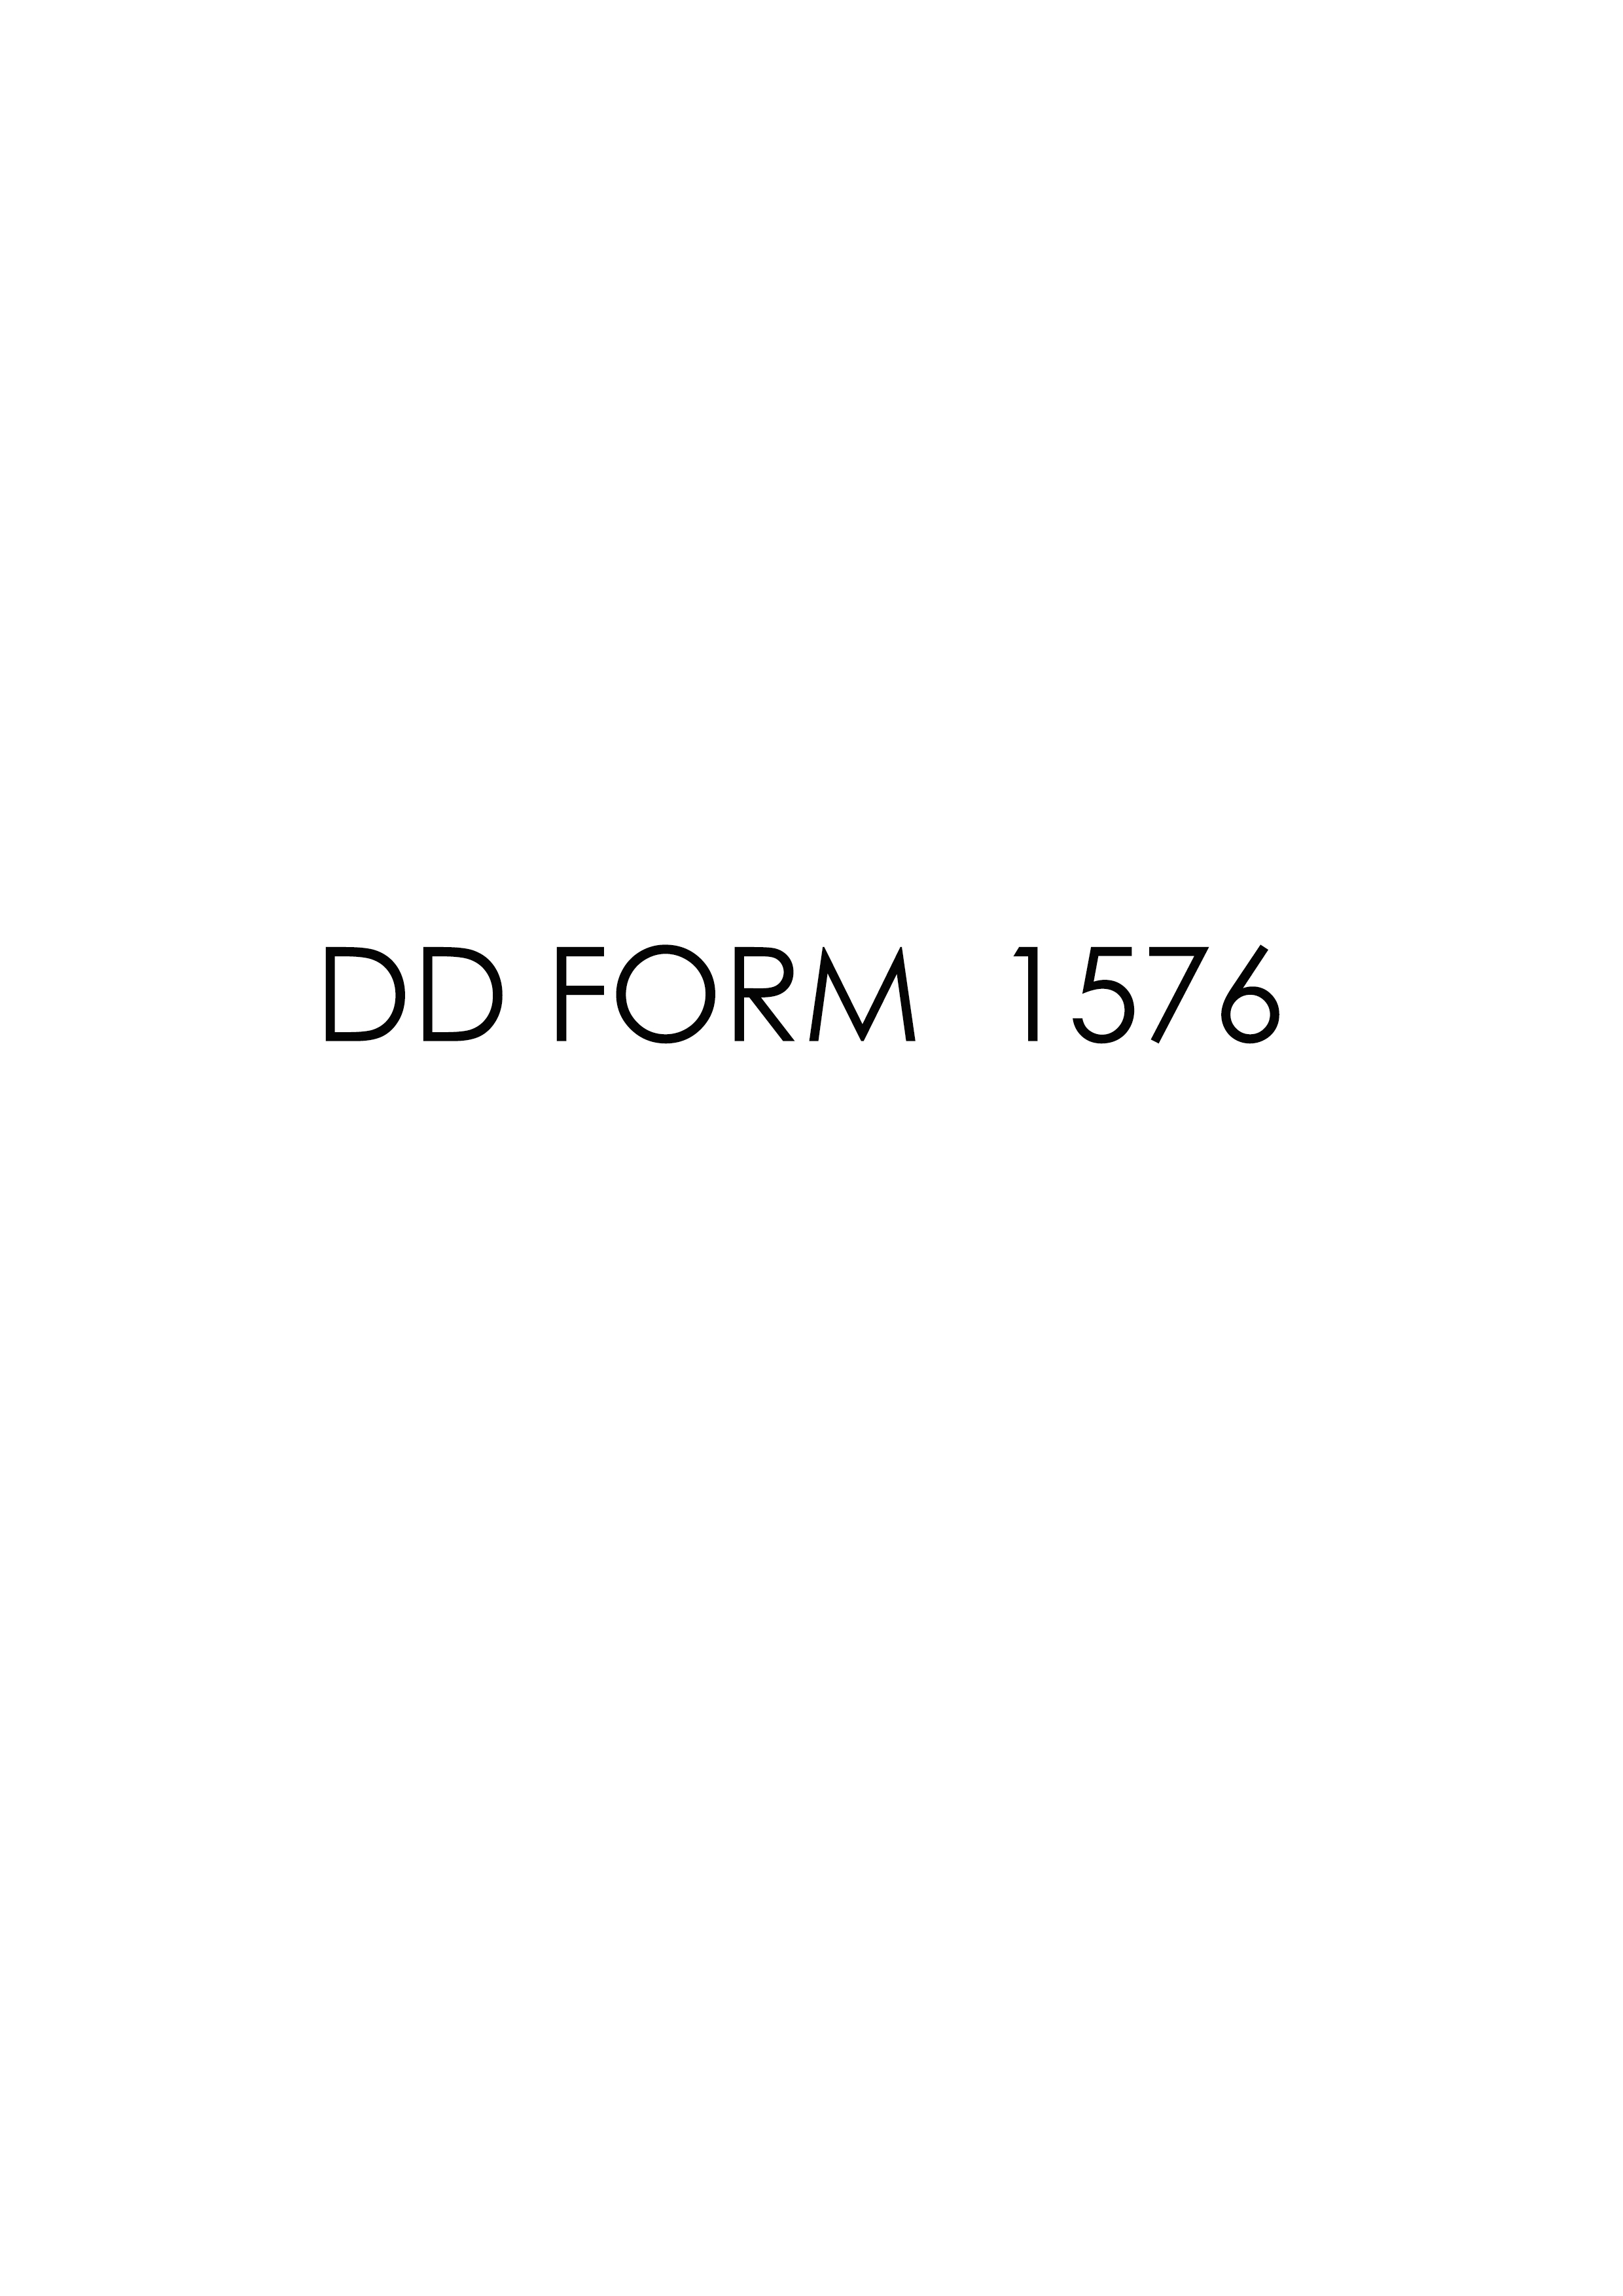 Download dd 1576 Form